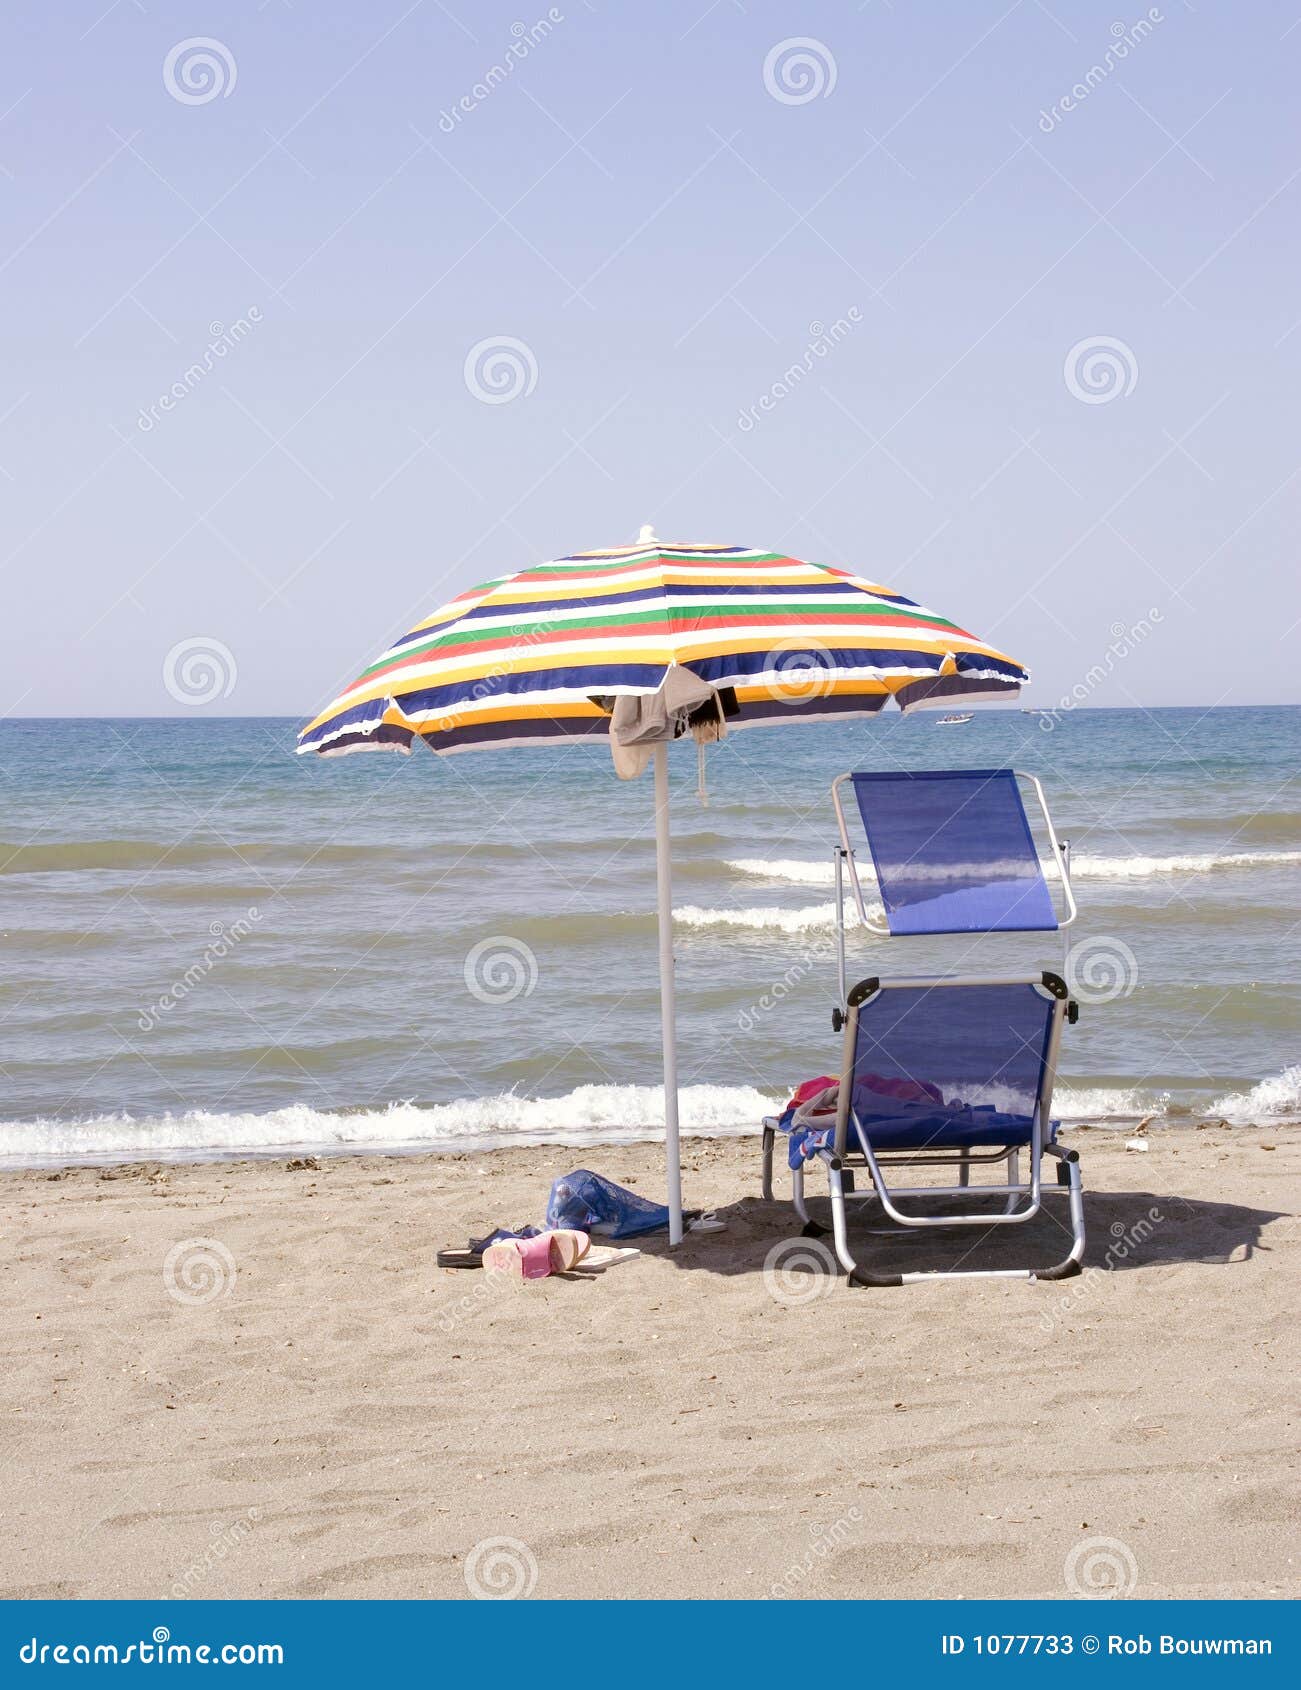 Beach fun stock image. Image of relaxation, enjoy, exotic - 1077733